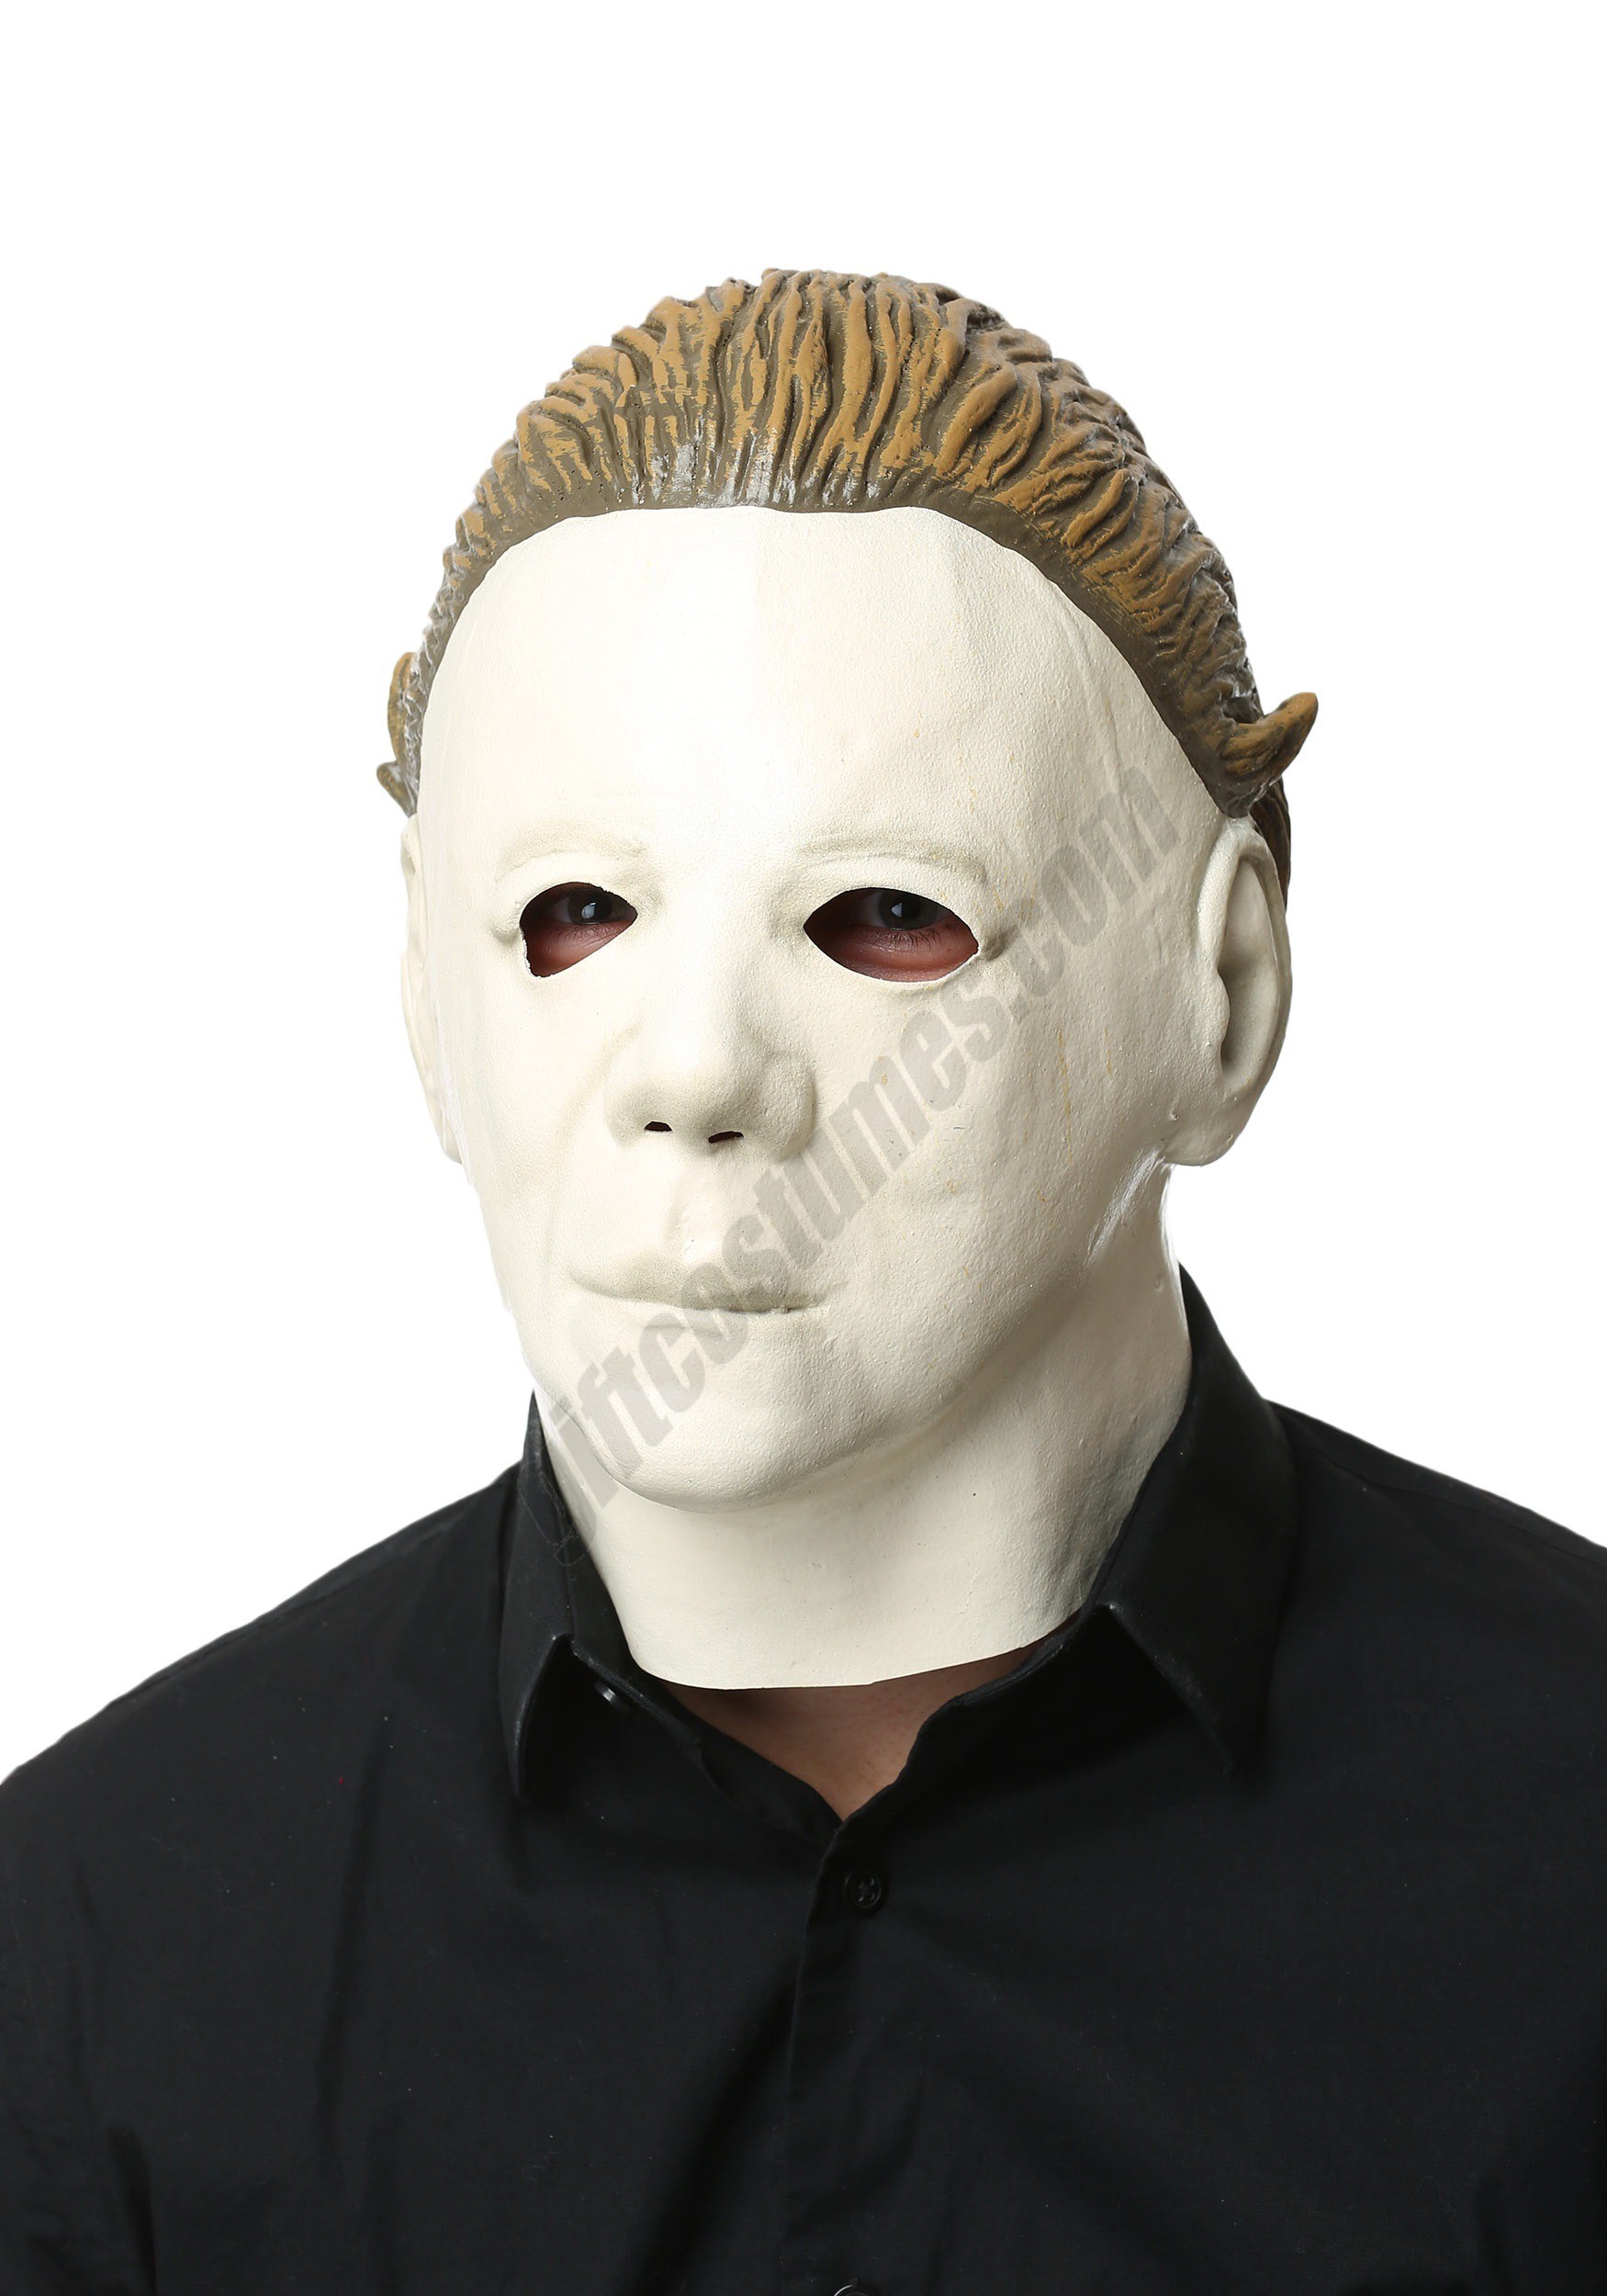 Licensed Halloween II Economy Mask Promotions - Licensed Halloween II Economy Mask Promotions